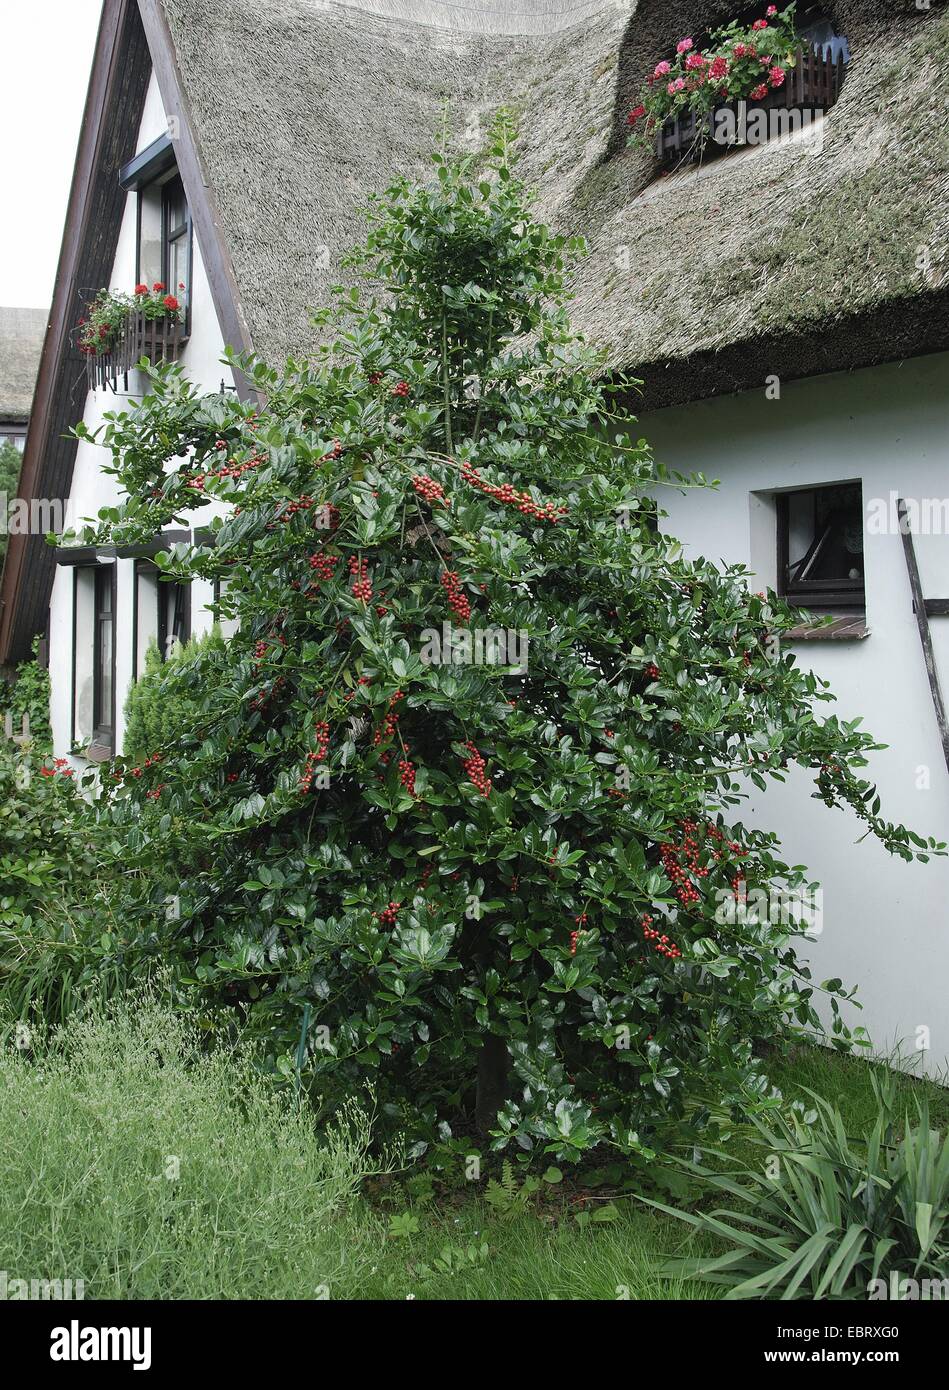 common holly, English holly (Ilex aquifolium 'J.C. van Tol', Ilex aquifolium J.C. van Tol), fruiting in front of a house, Germany Stock Photo